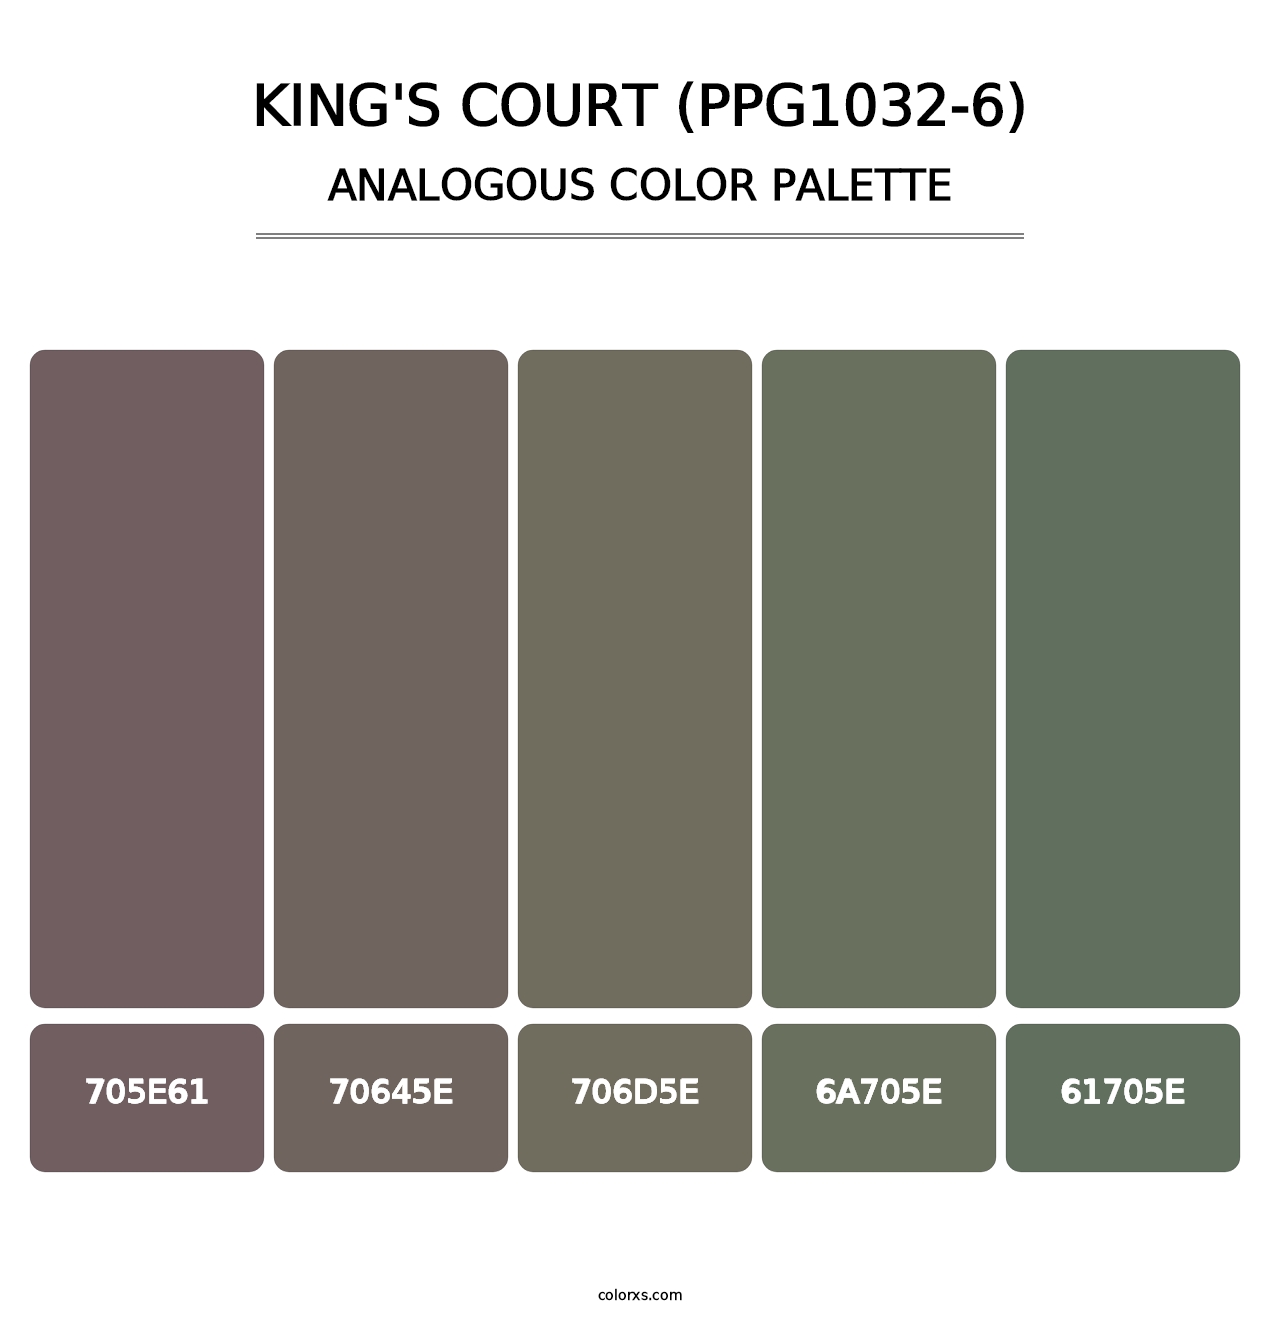 King's Court (PPG1032-6) - Analogous Color Palette